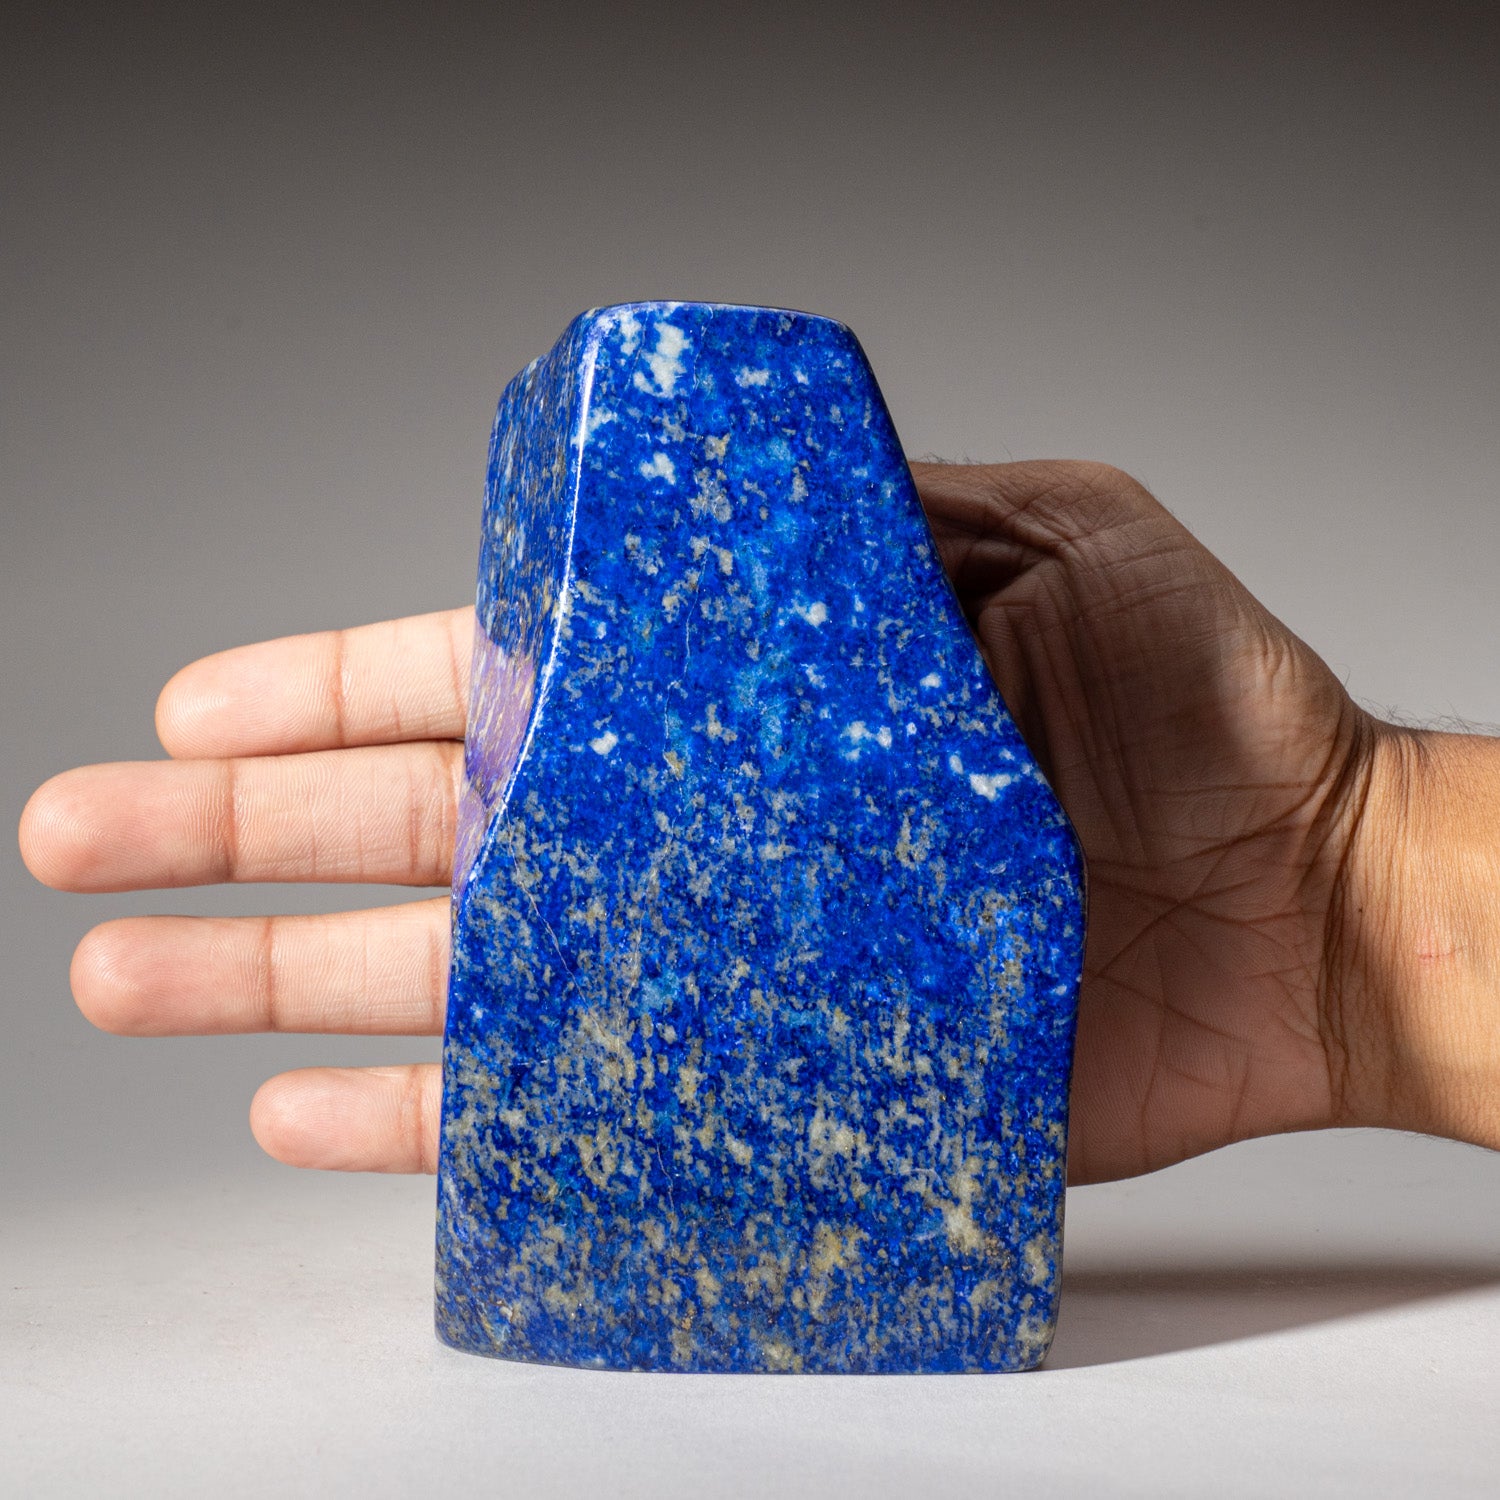 Polished Lapis Lazuli Freeform from Afghanistan (2.7 lbs)